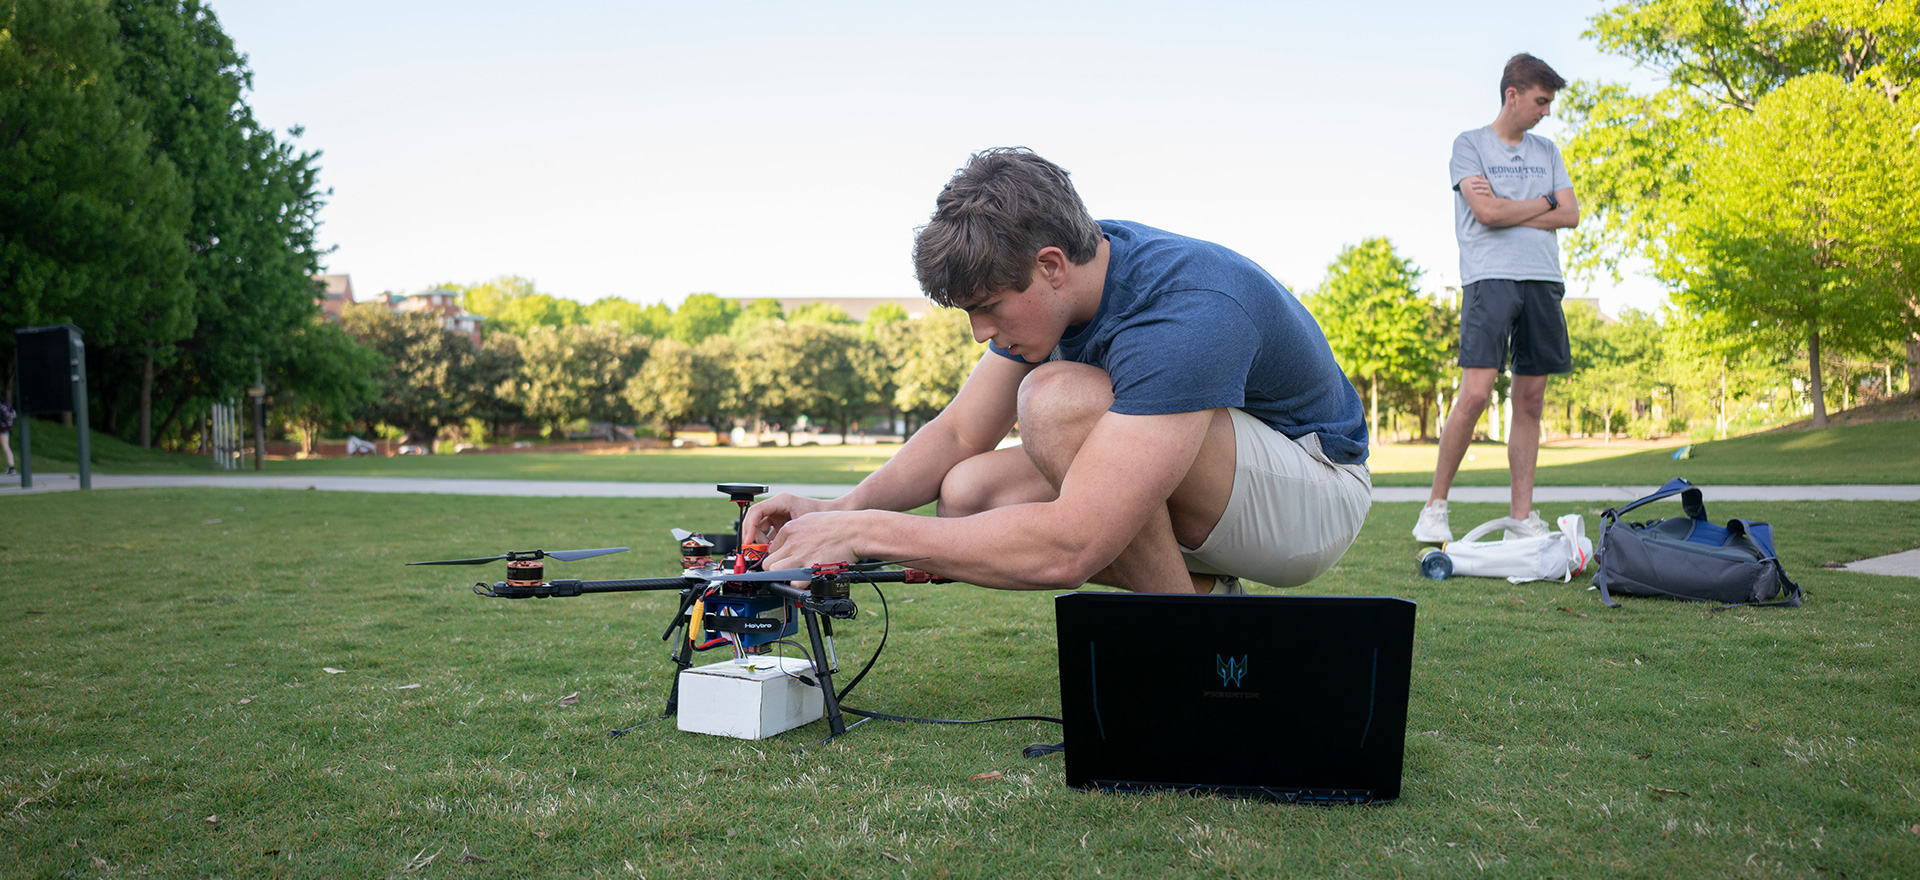 Student kneeling on grass adjusting small drone.